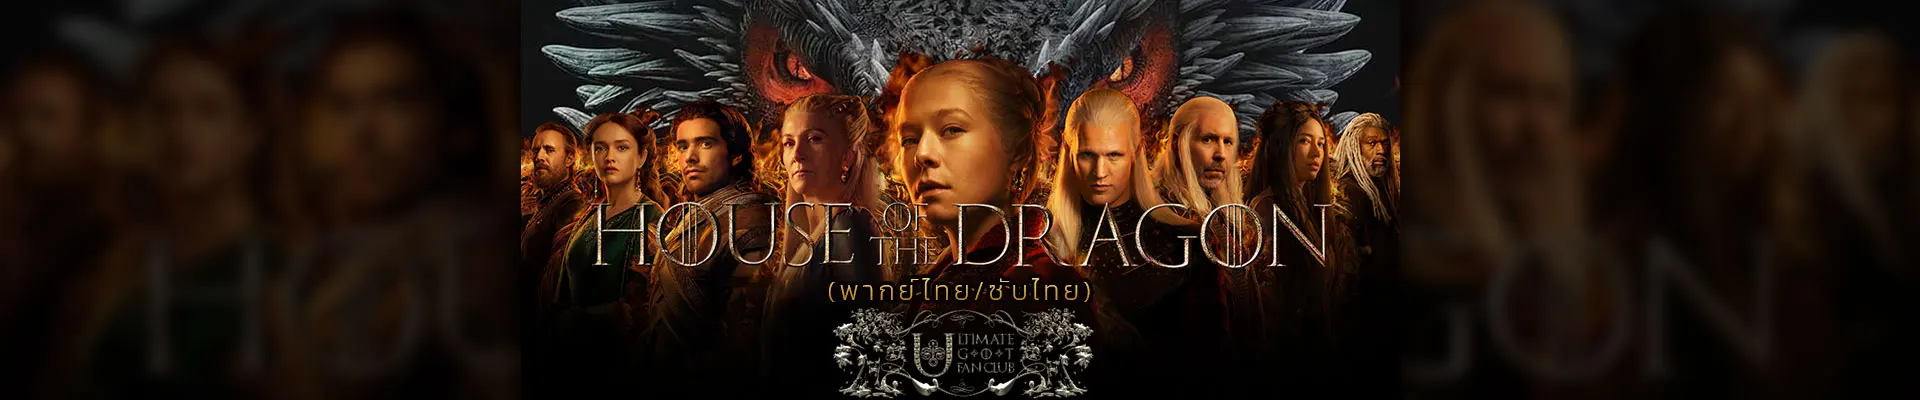 House of the Dragon (2022) ศึกสายเลือดแห่งทาร์แกเรียน